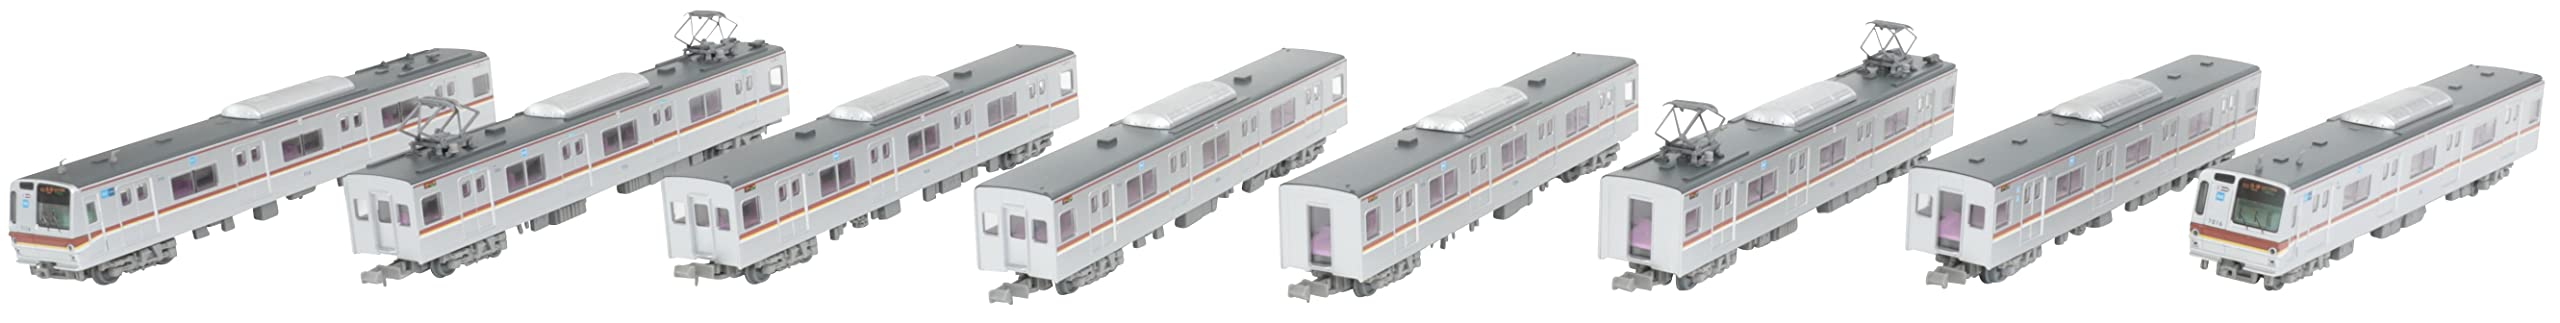 Tomytec Railway Collection Tokyo Metro Series 7000 Fukutoshin Line 8-Car Set Diorama Japan 317227